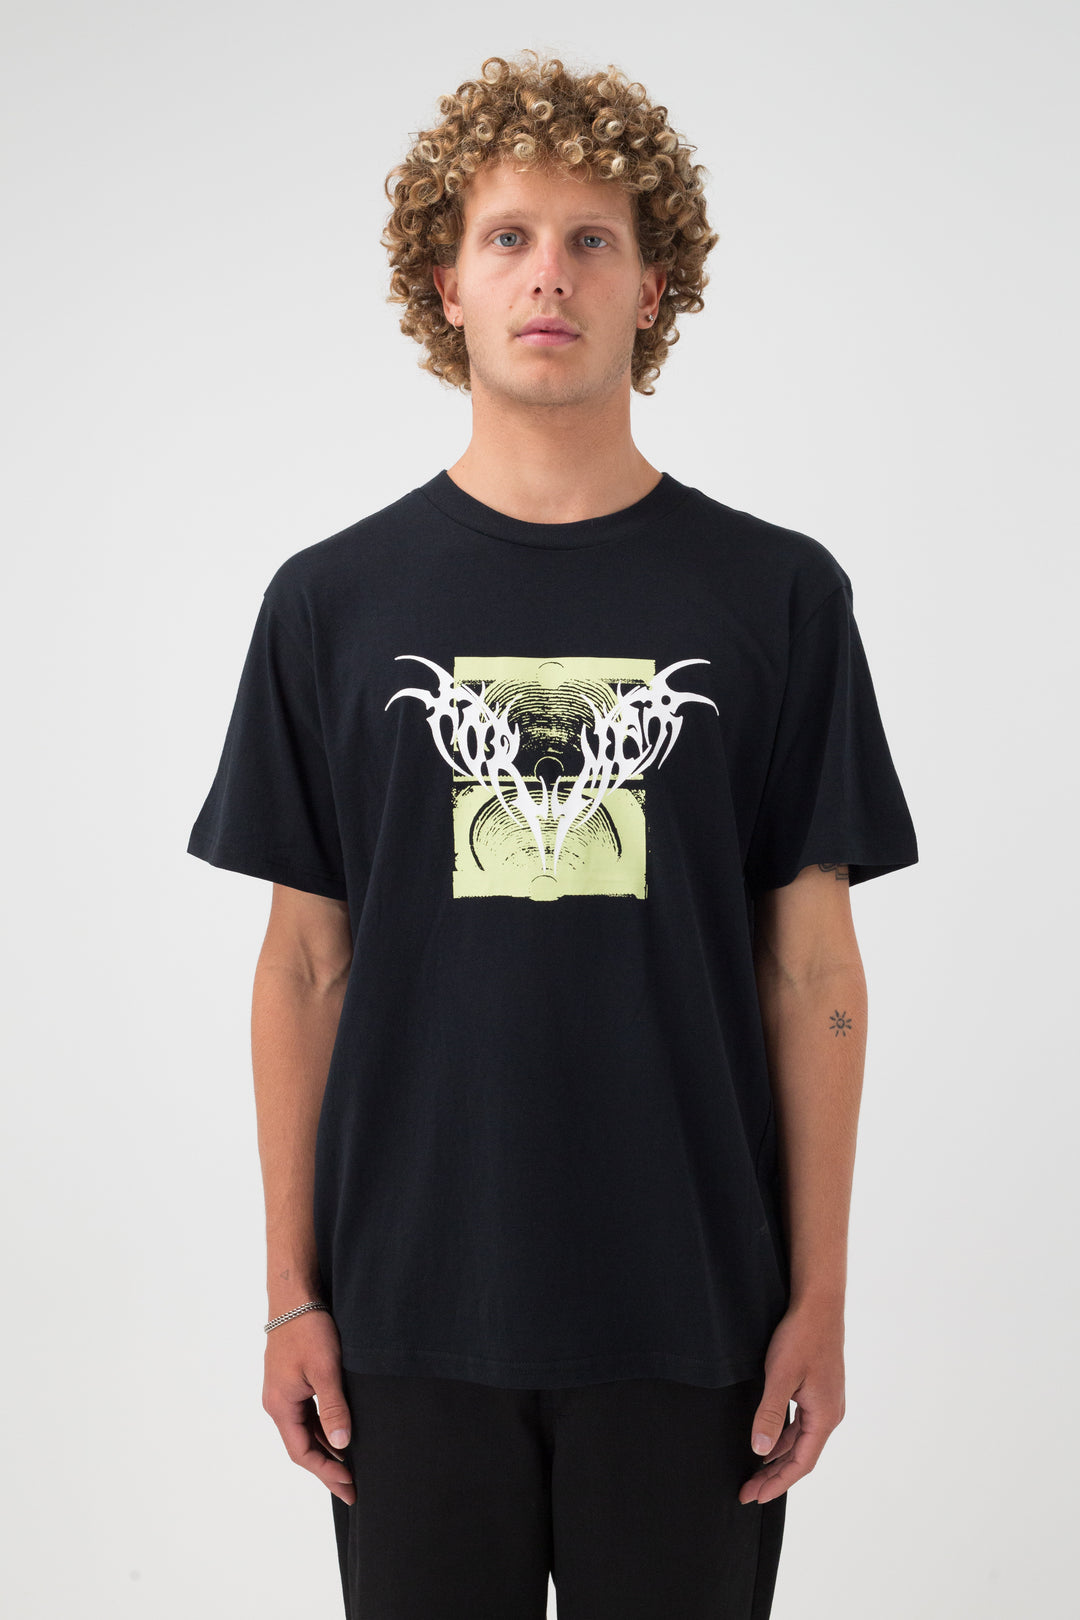 FORMER Tribal Crux T-Shirt